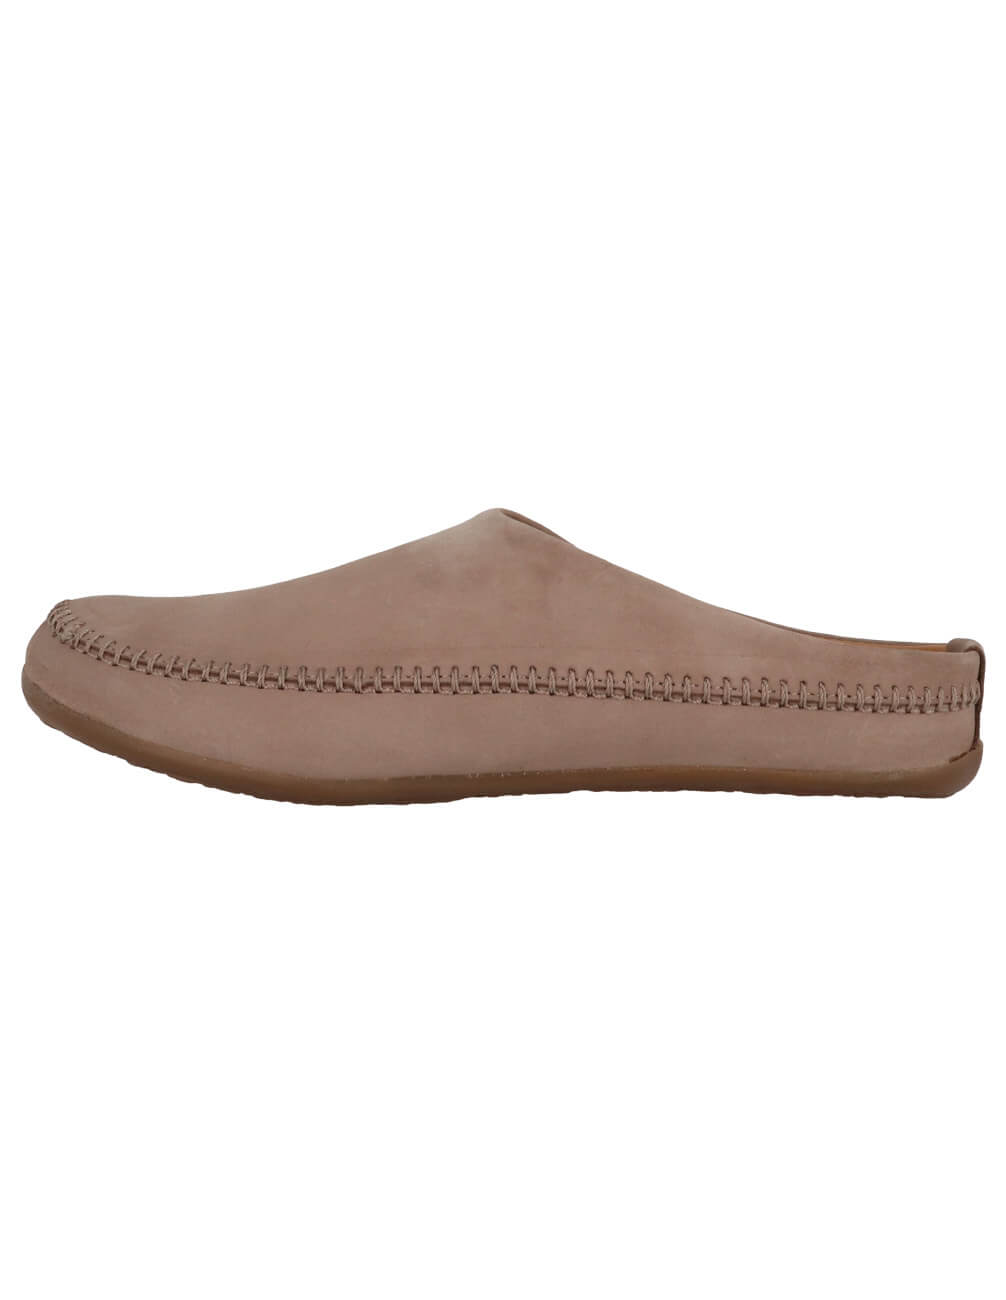 HAFLINGER leather Slippers | Everest Softi, Beige